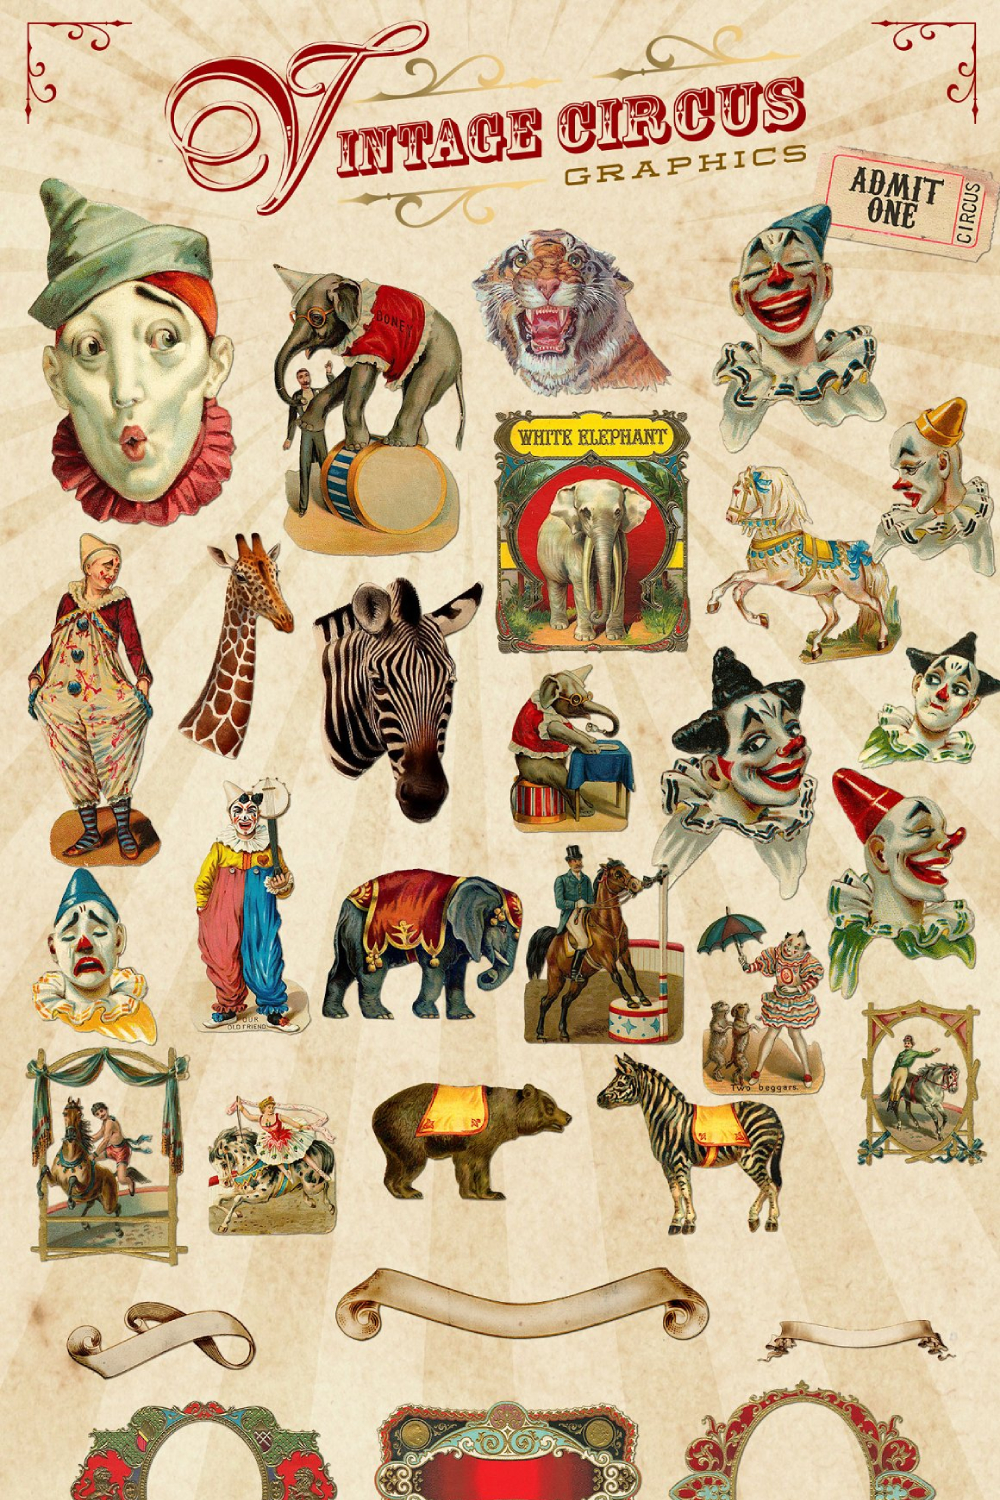 Vintage Circus Graphics - Pinterest.